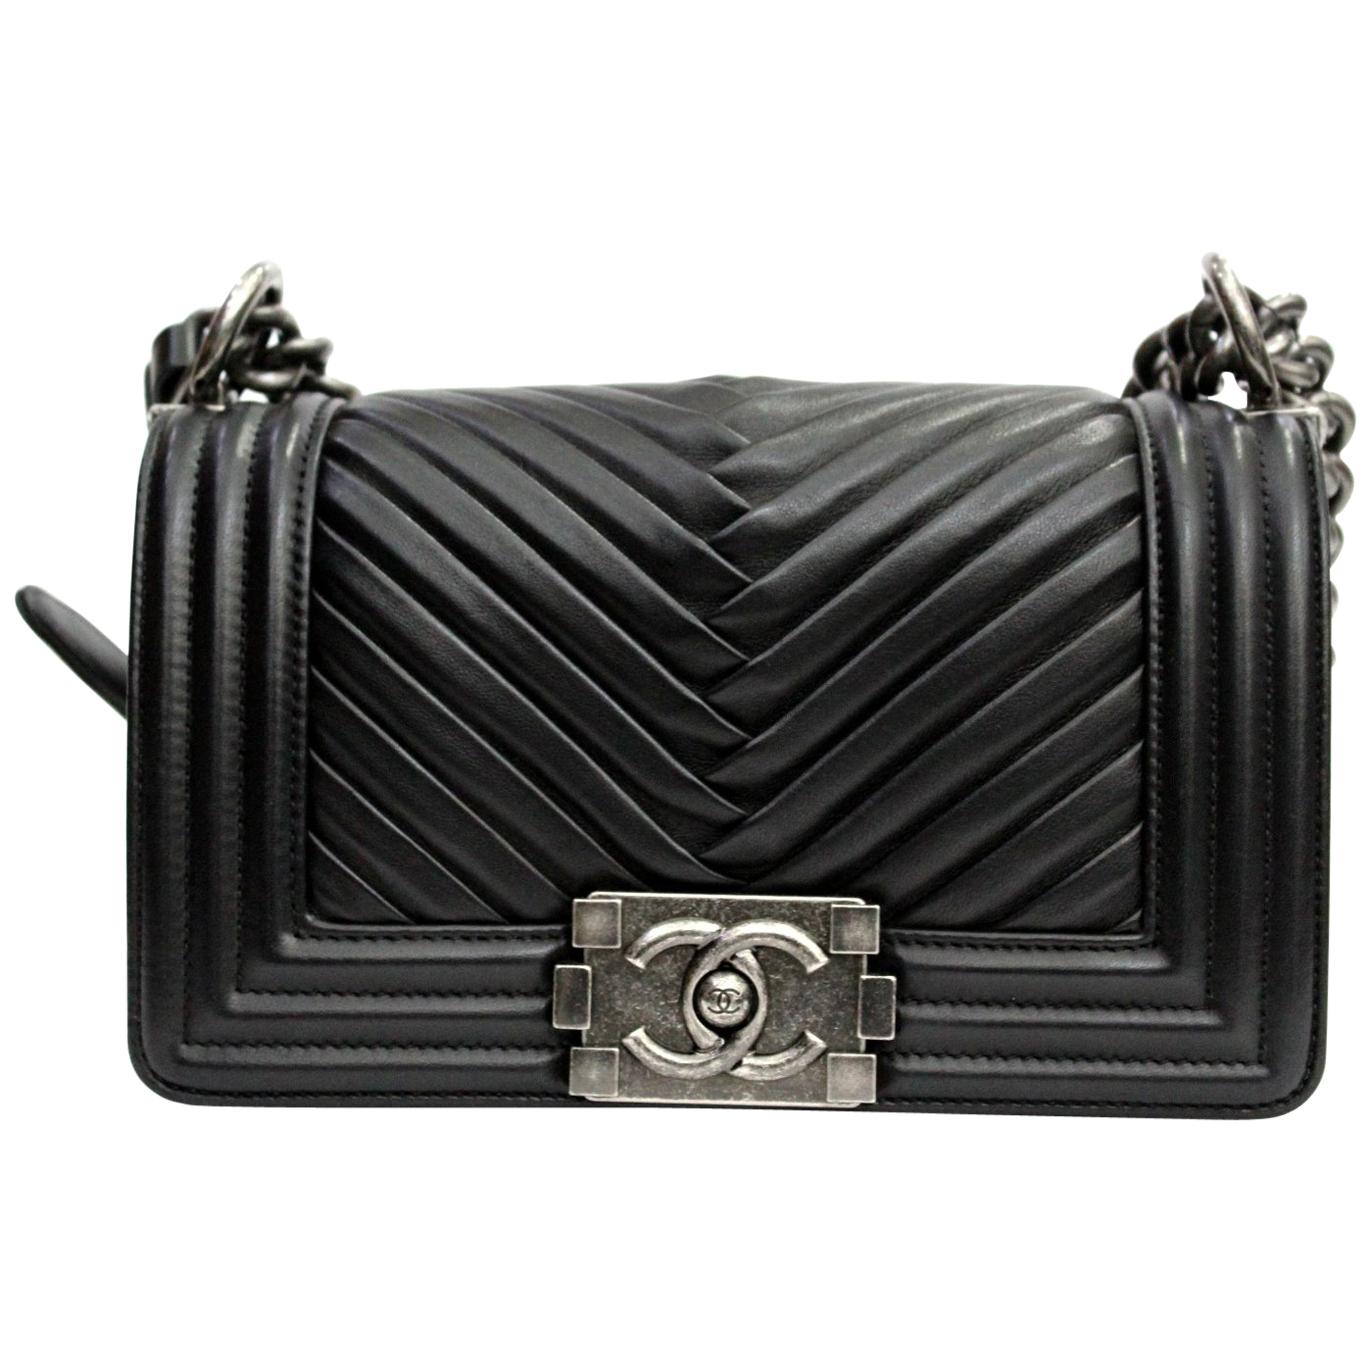 Chanel Black Leather Small Boy Bag